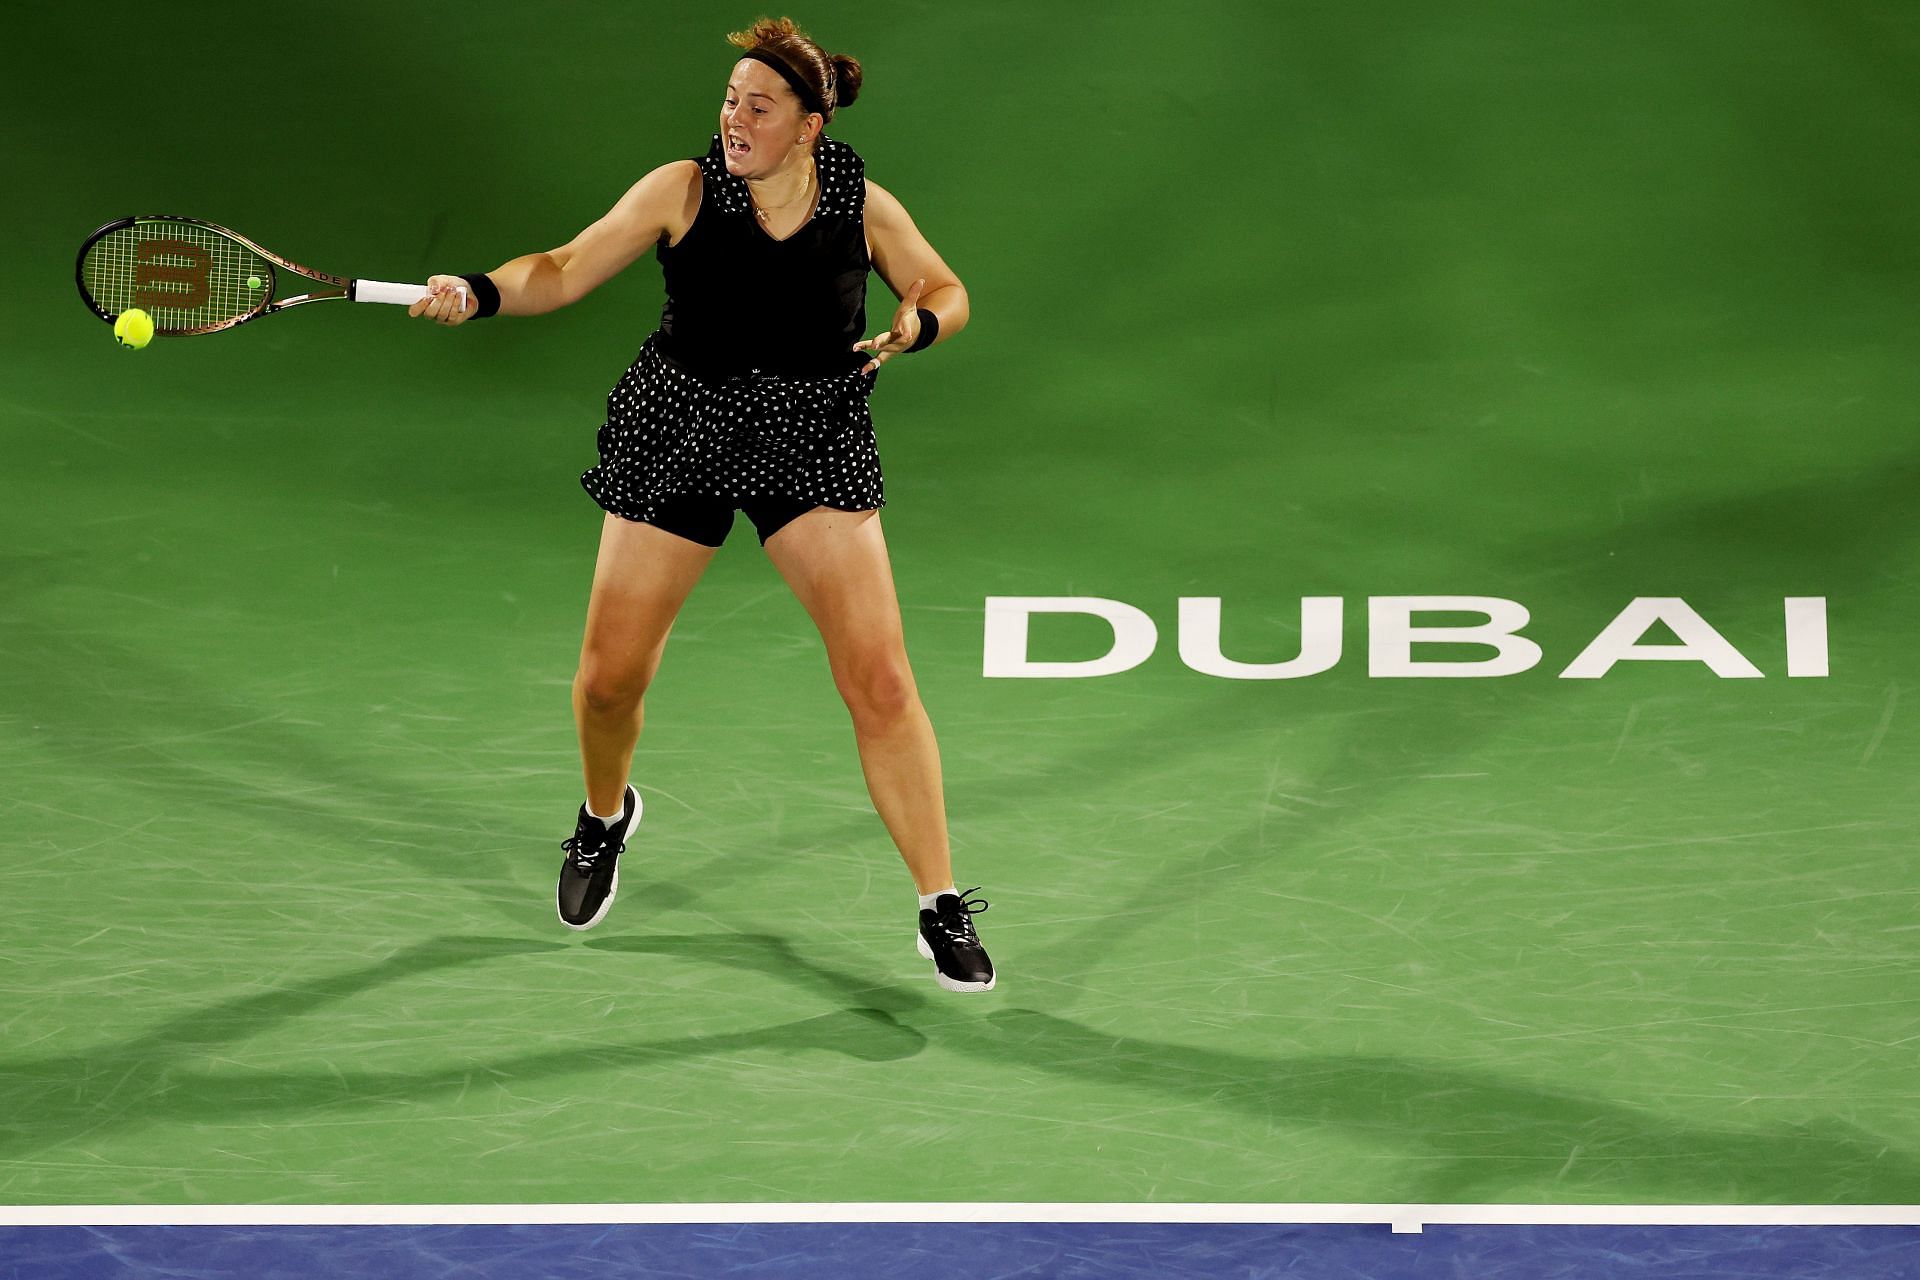 Ostapenko wins Dubai Duty Free Tennis Championships - The UAE News